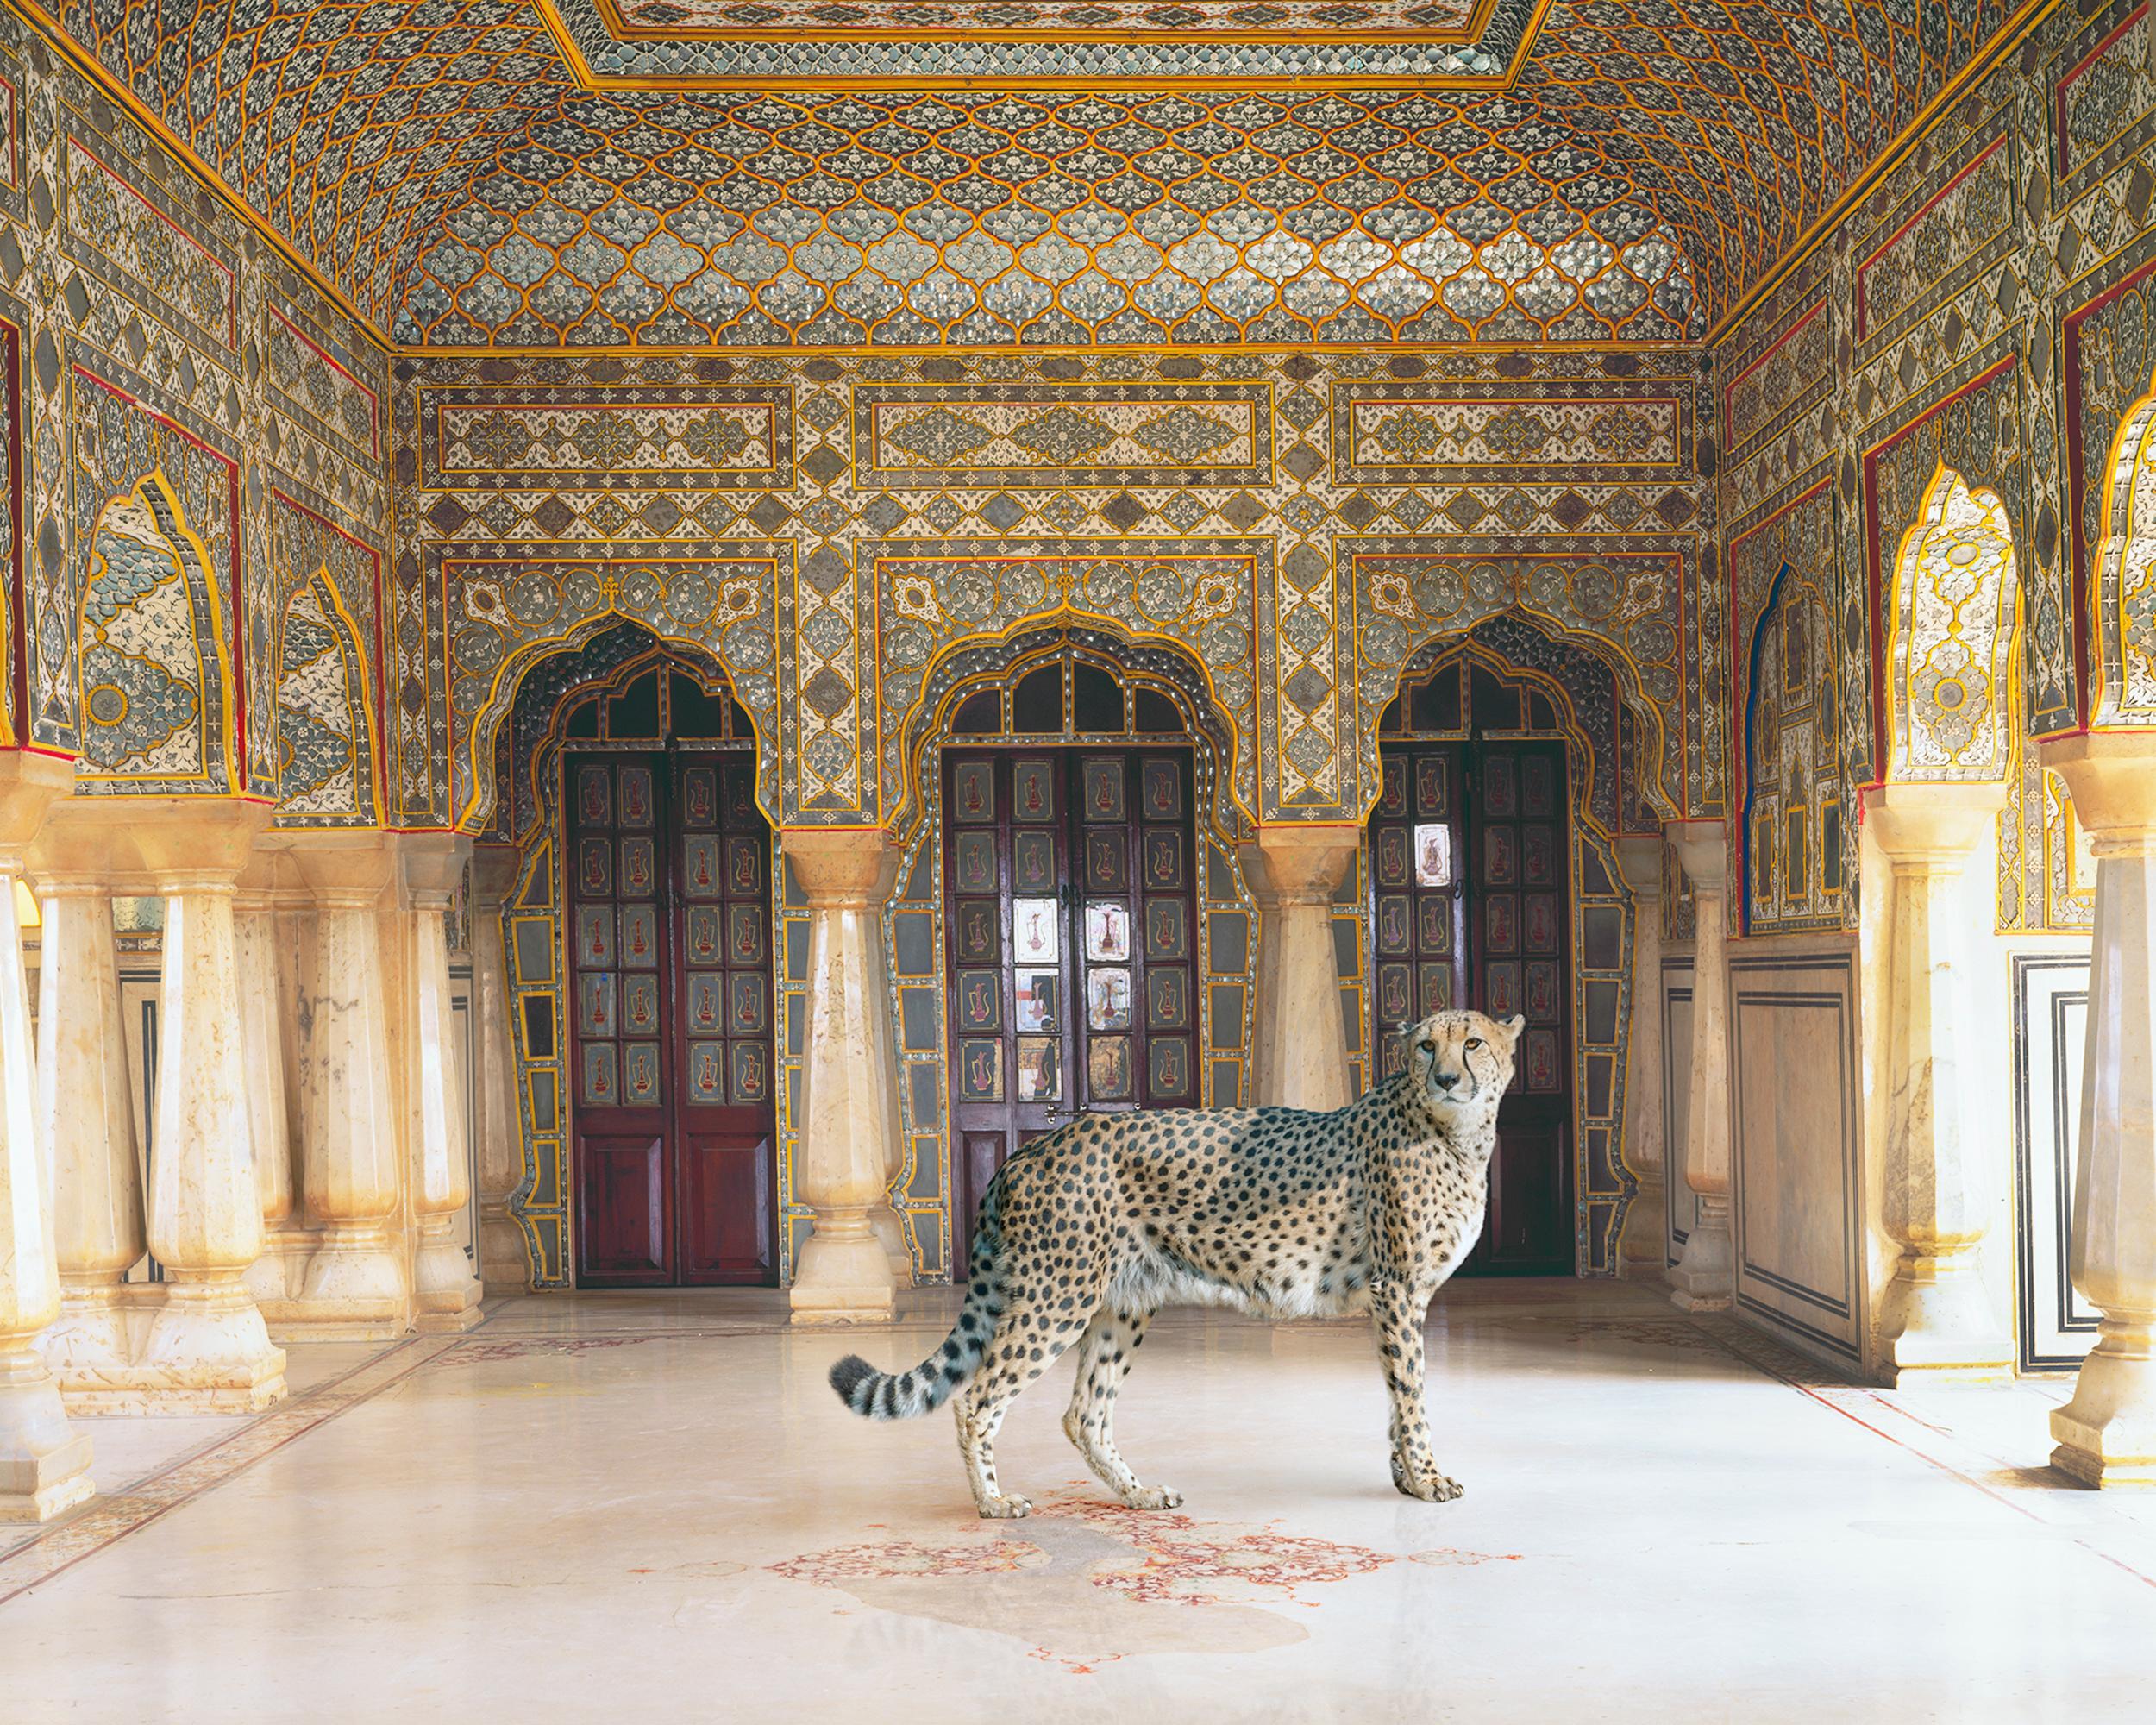 Animal Print Karen Knorr - Le retour du chasseur, Chandra Mahal, Jaipur, 2012